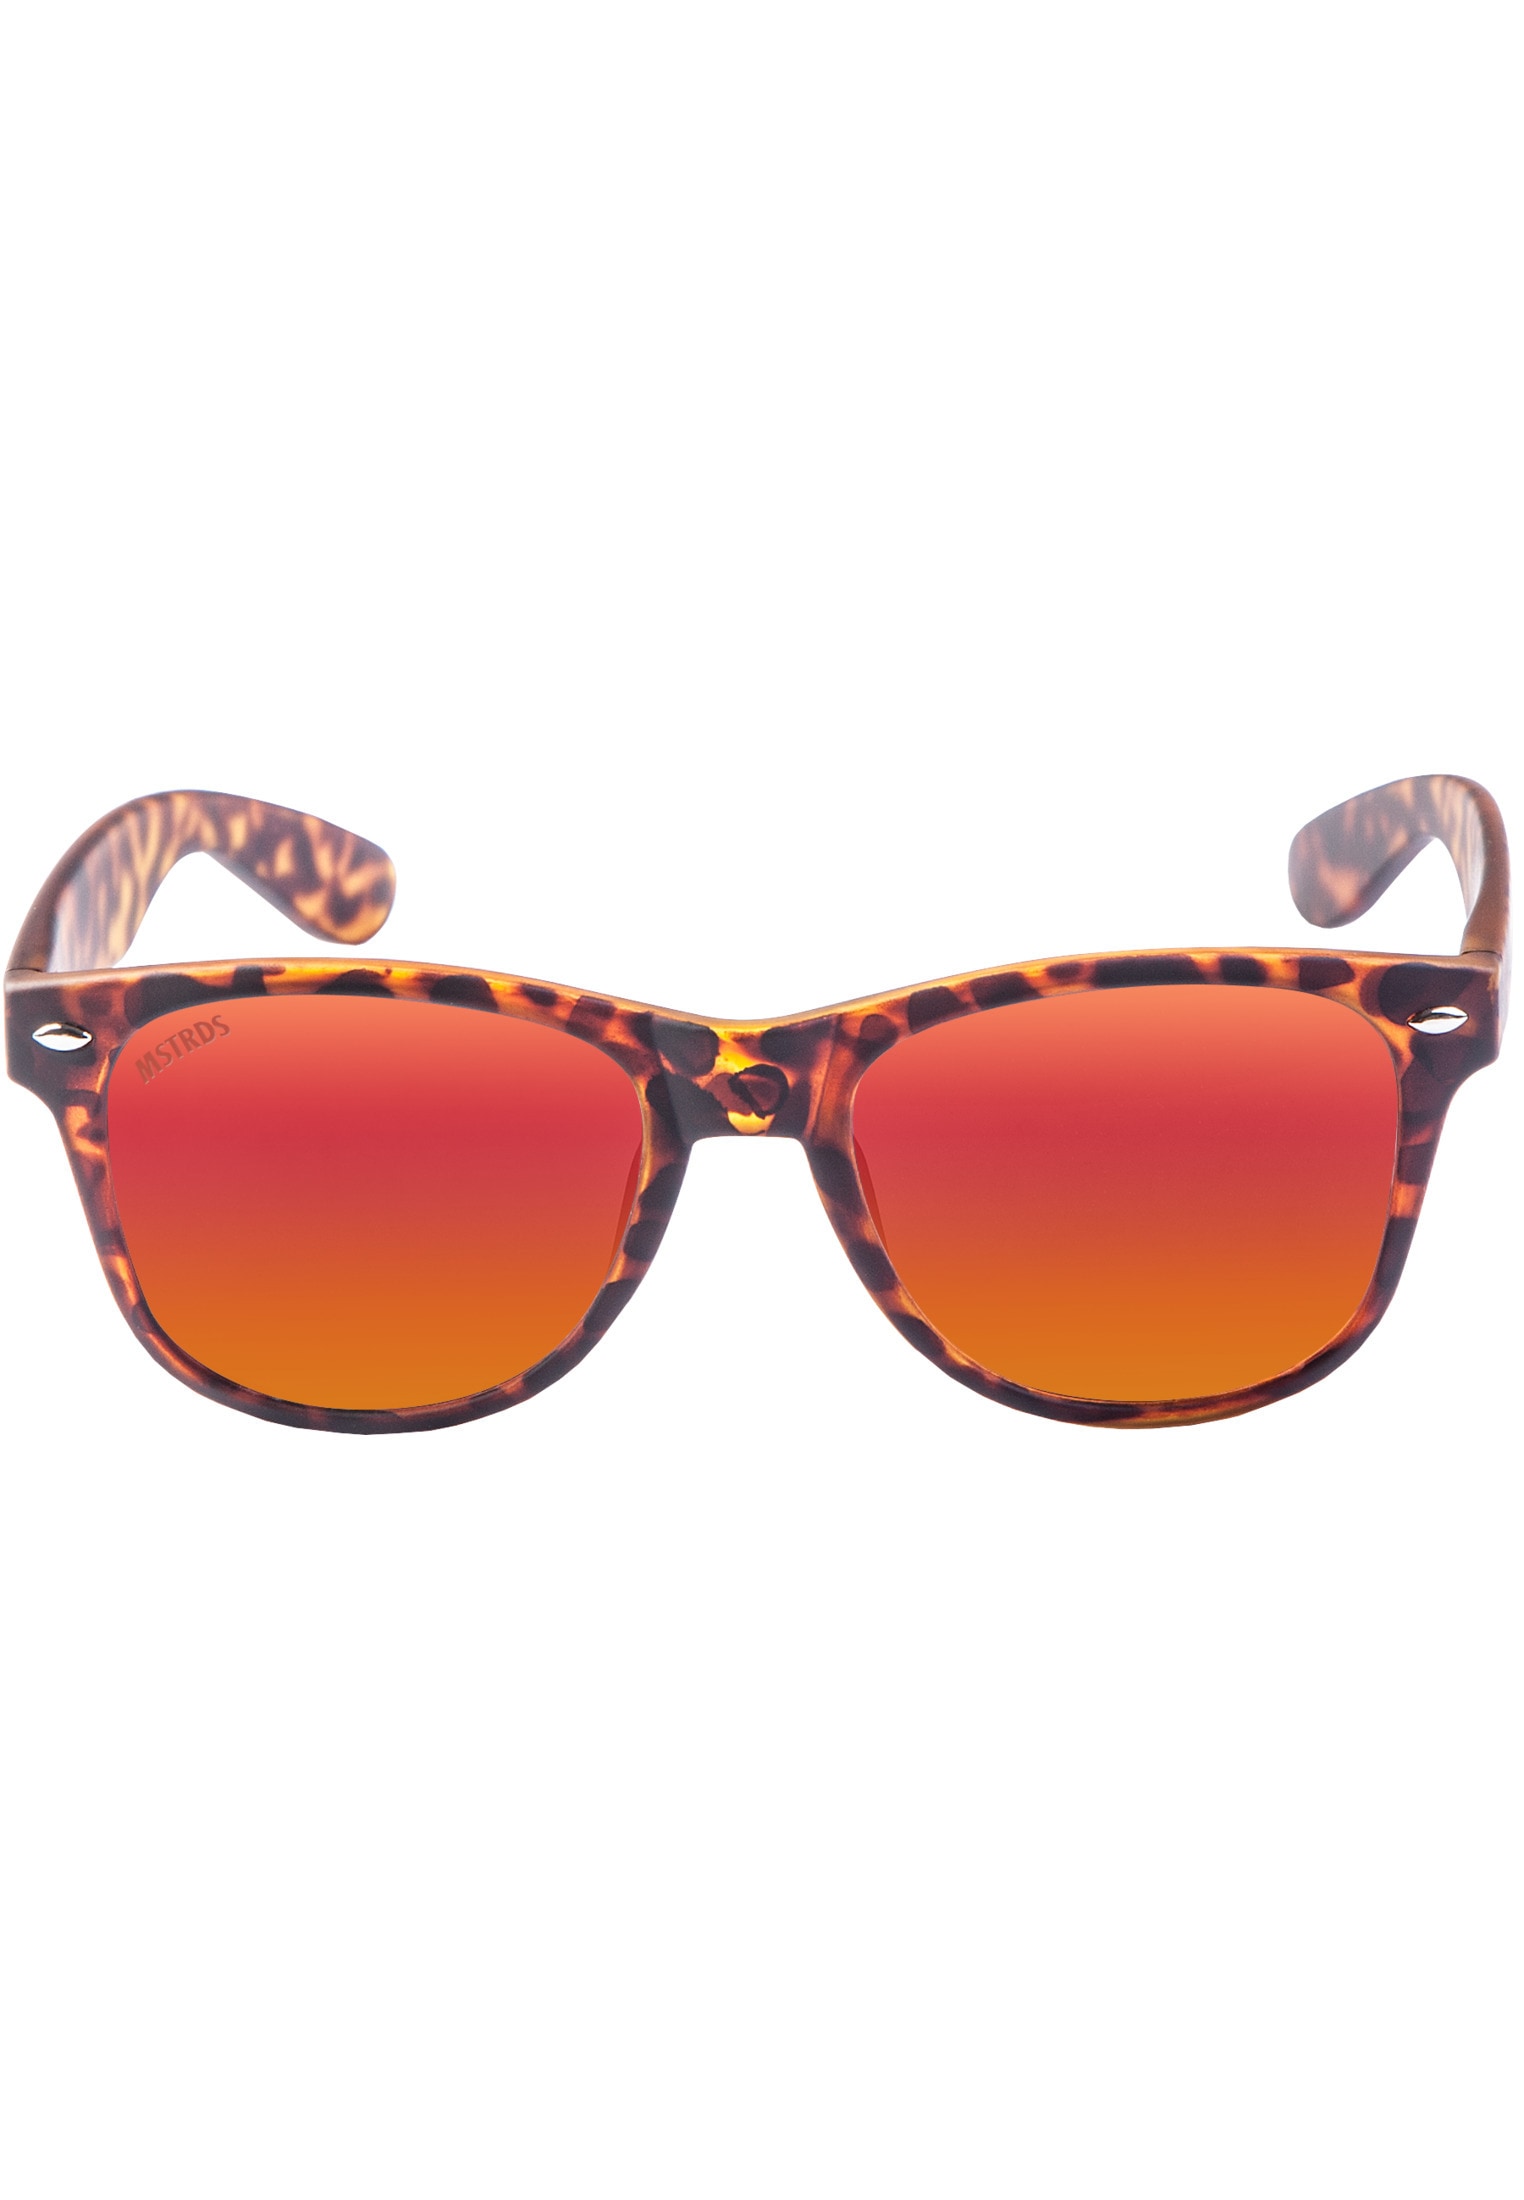 MSTRDS Sonnenbrille »Accessoires Sunglasses walking kaufen I\'m online | Likoma Youth«